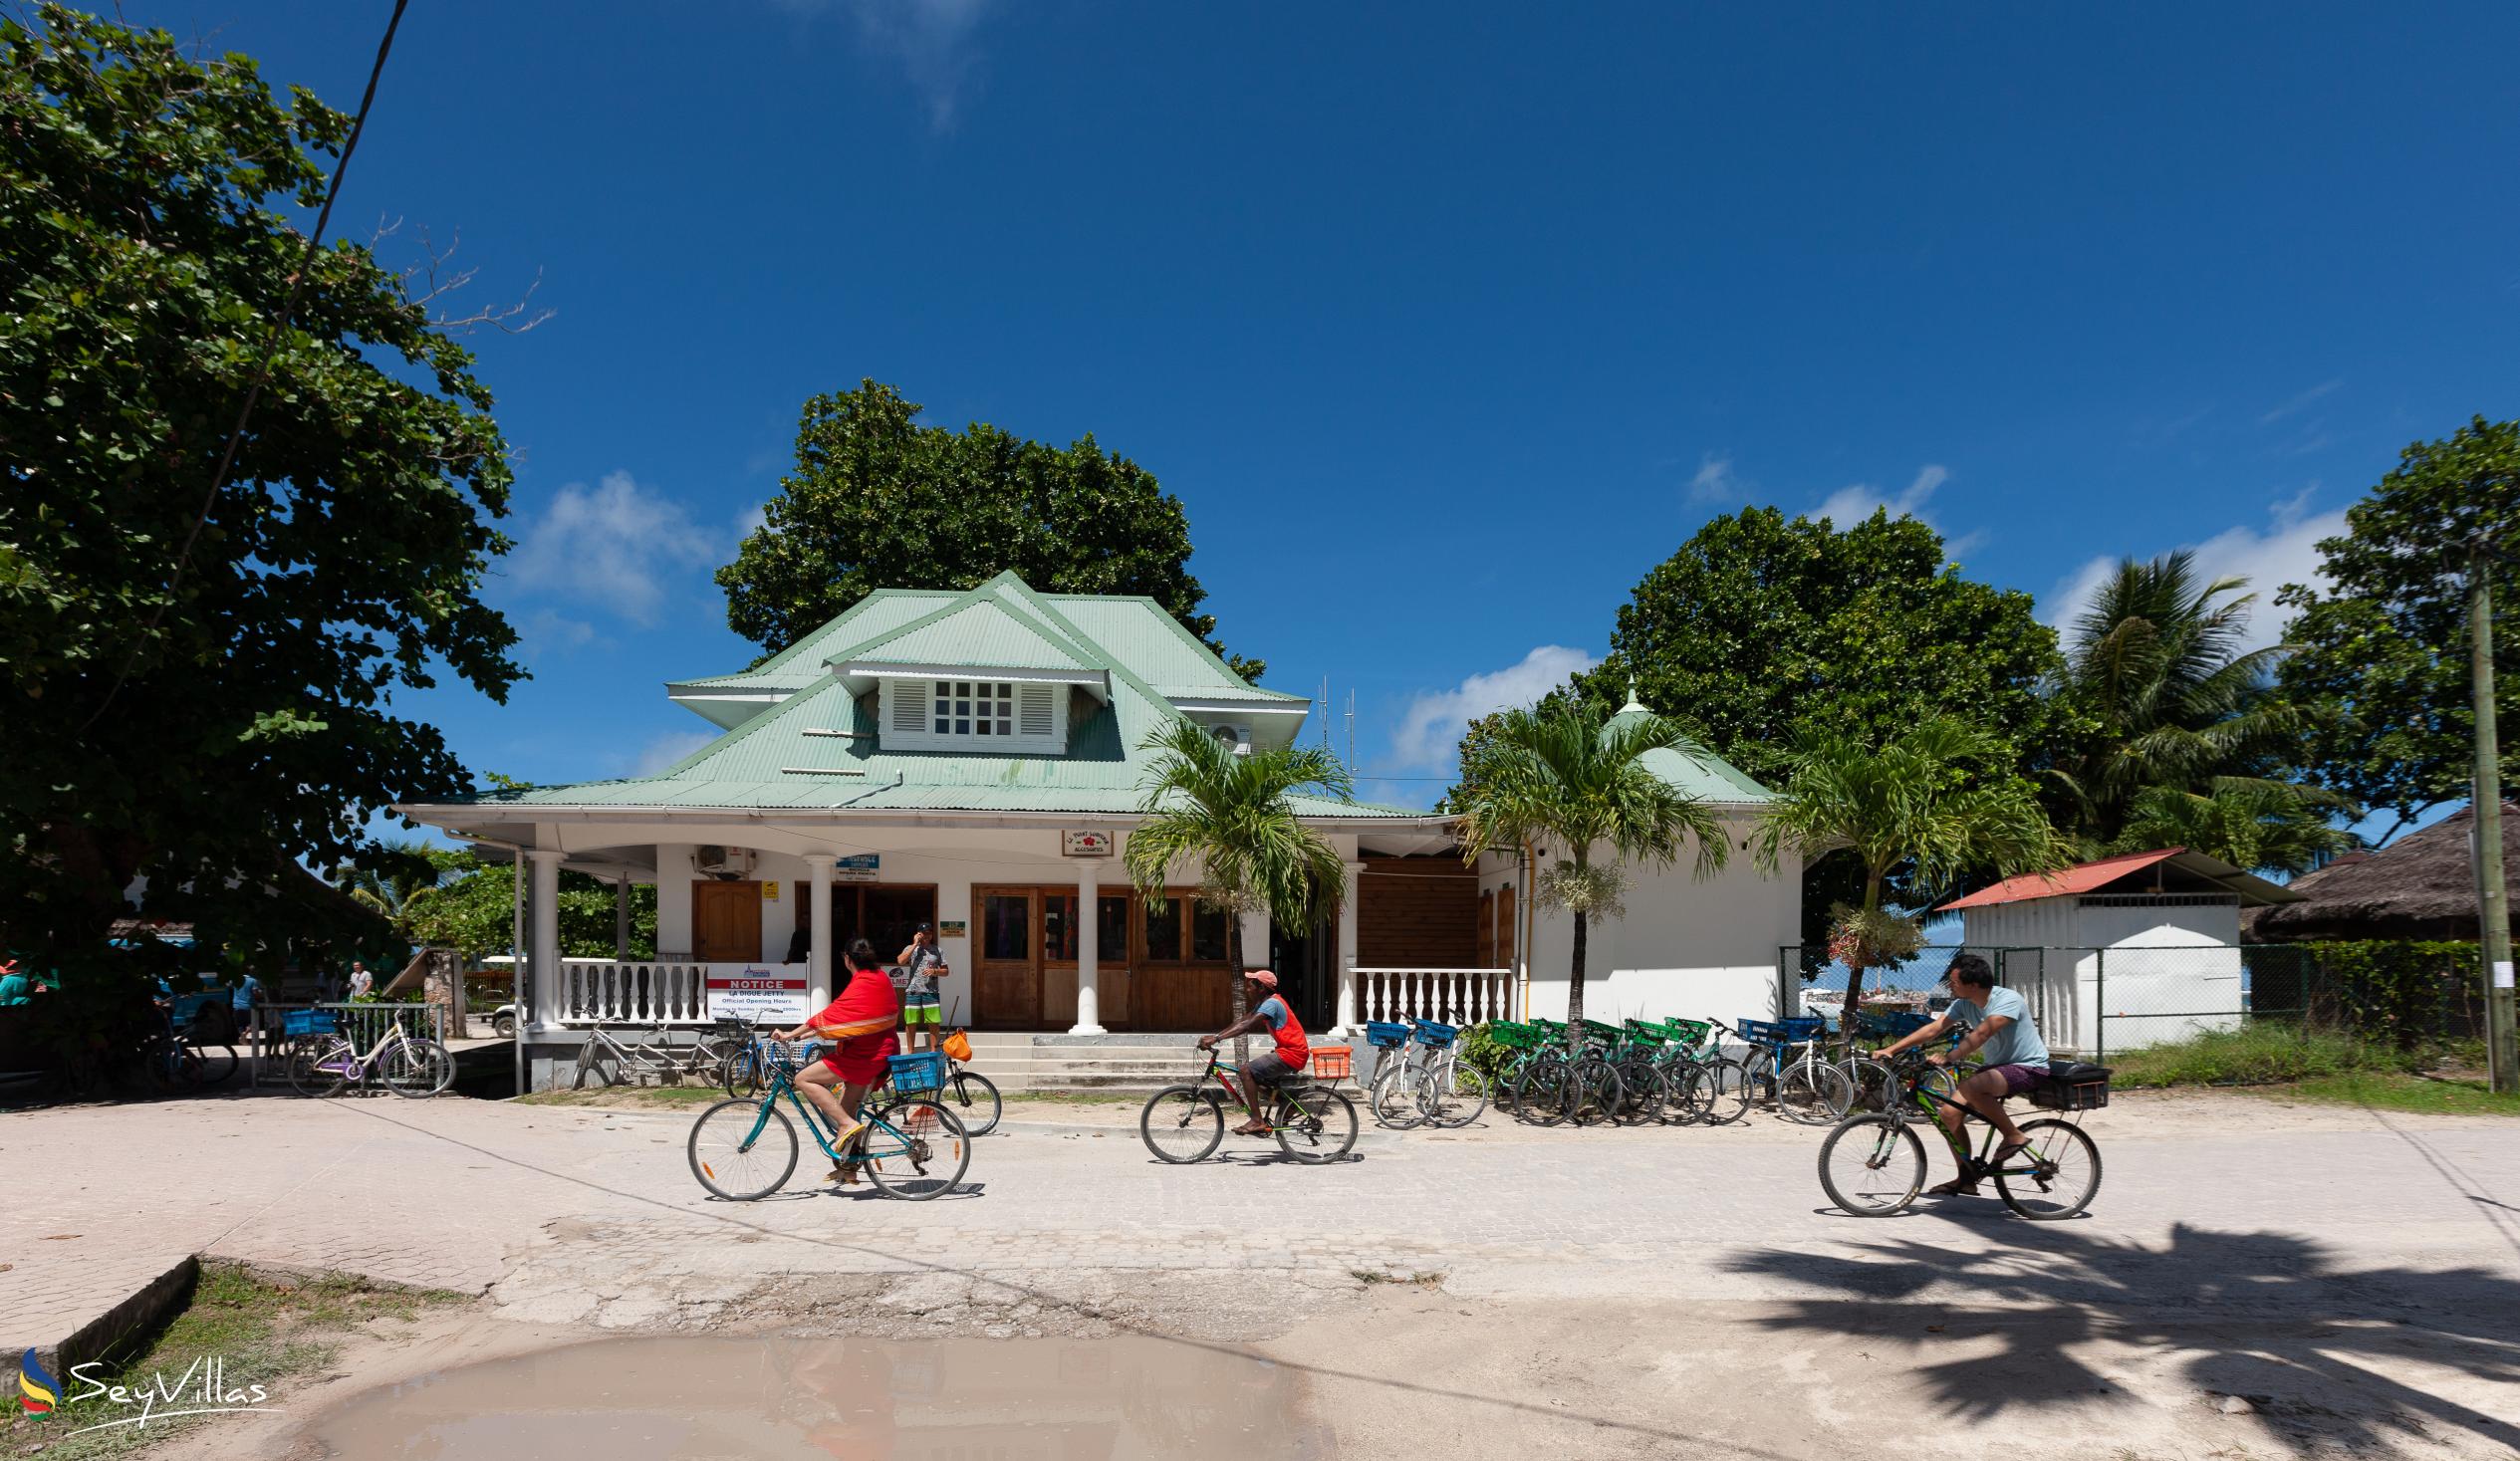 Foto 12: La Passe Holiday Villa - Lage - La Digue (Seychellen)